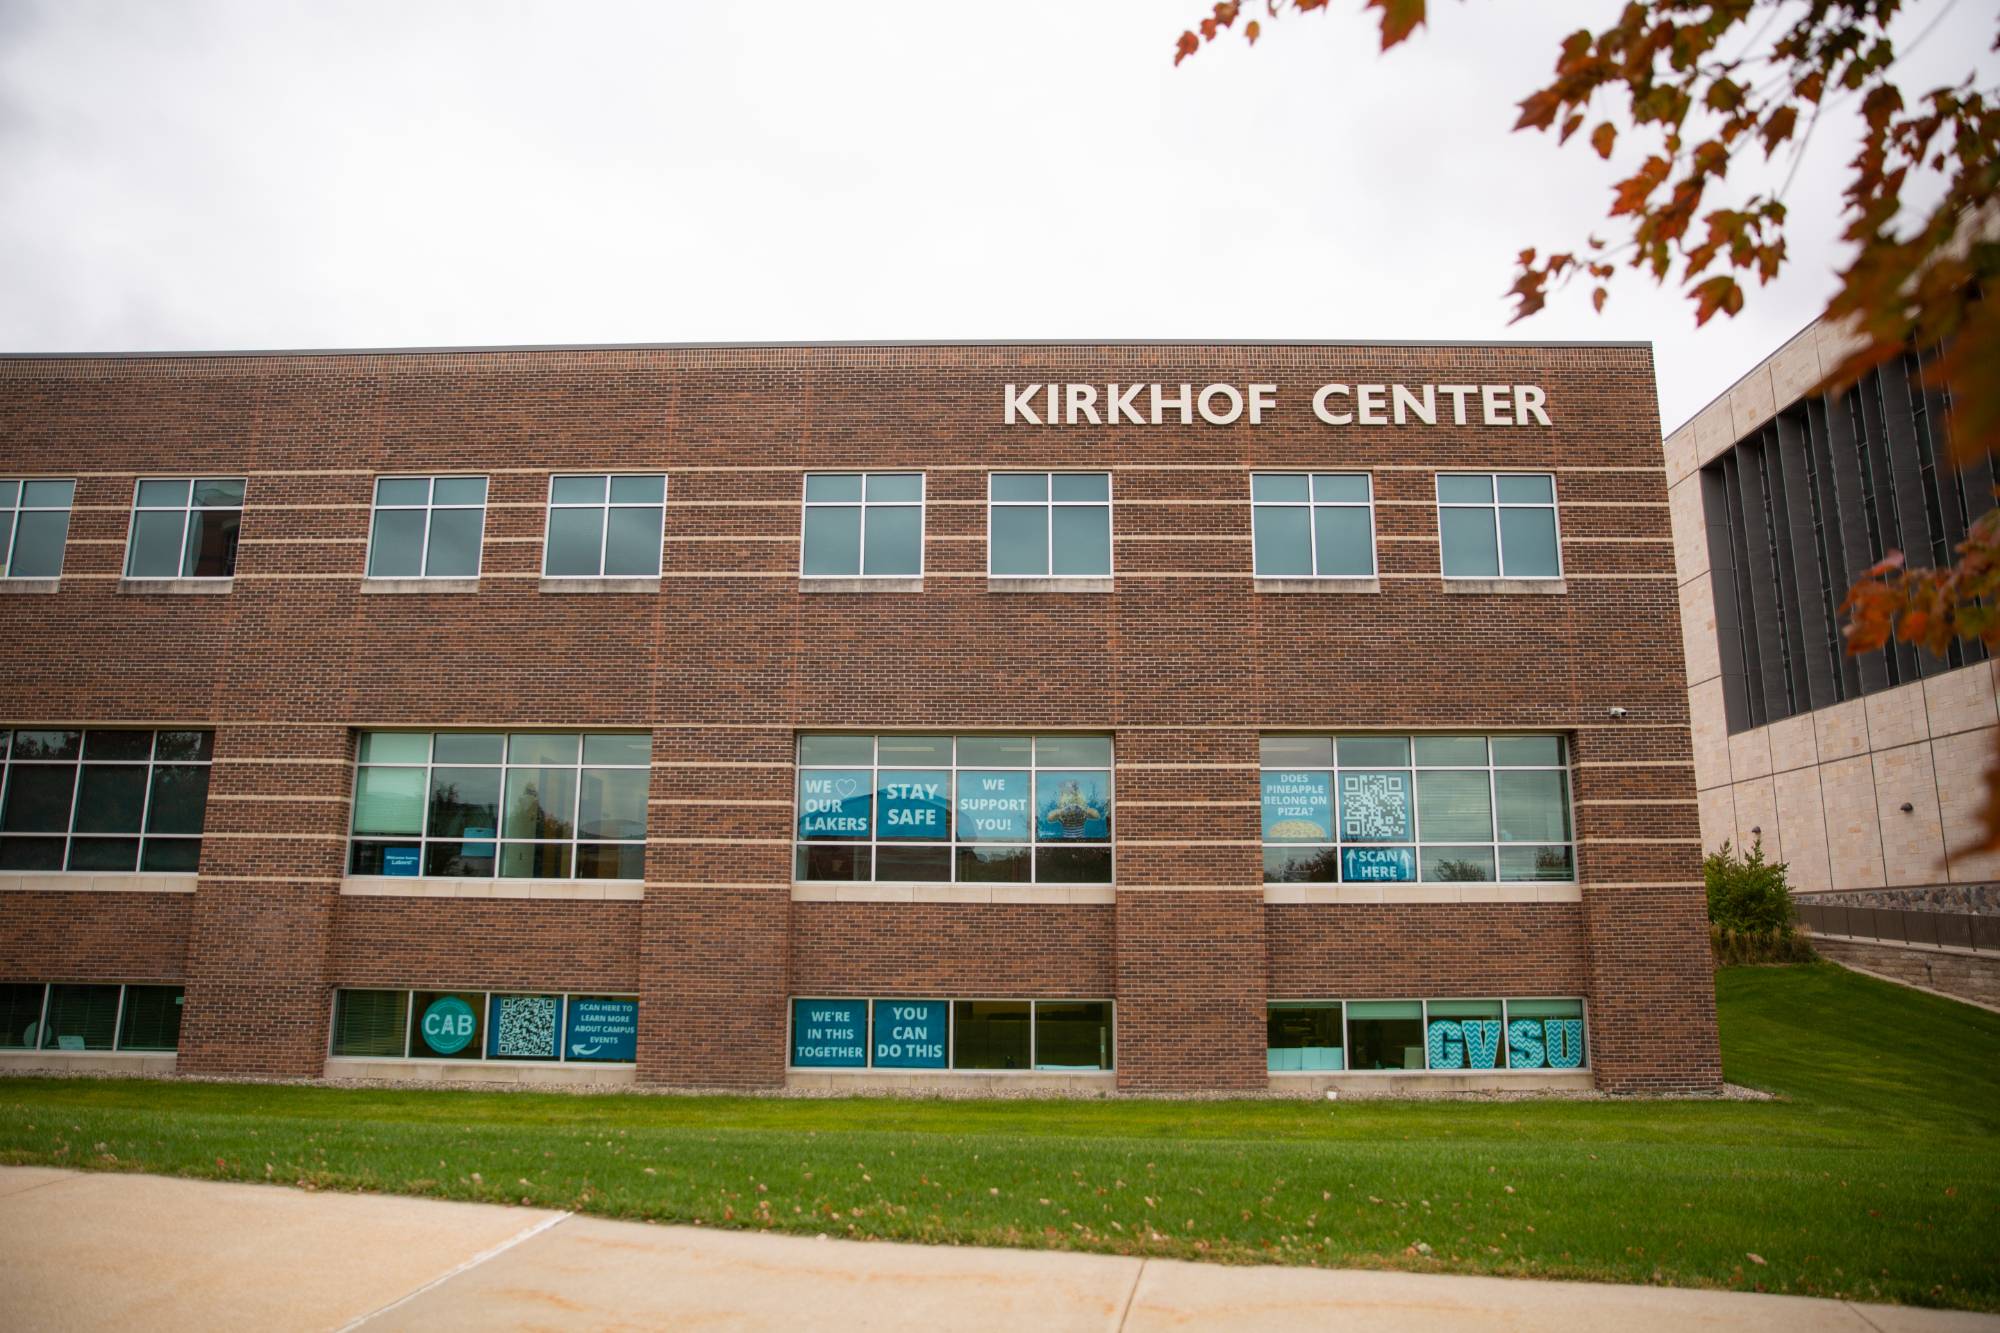 Exterior of Kirkhof Center